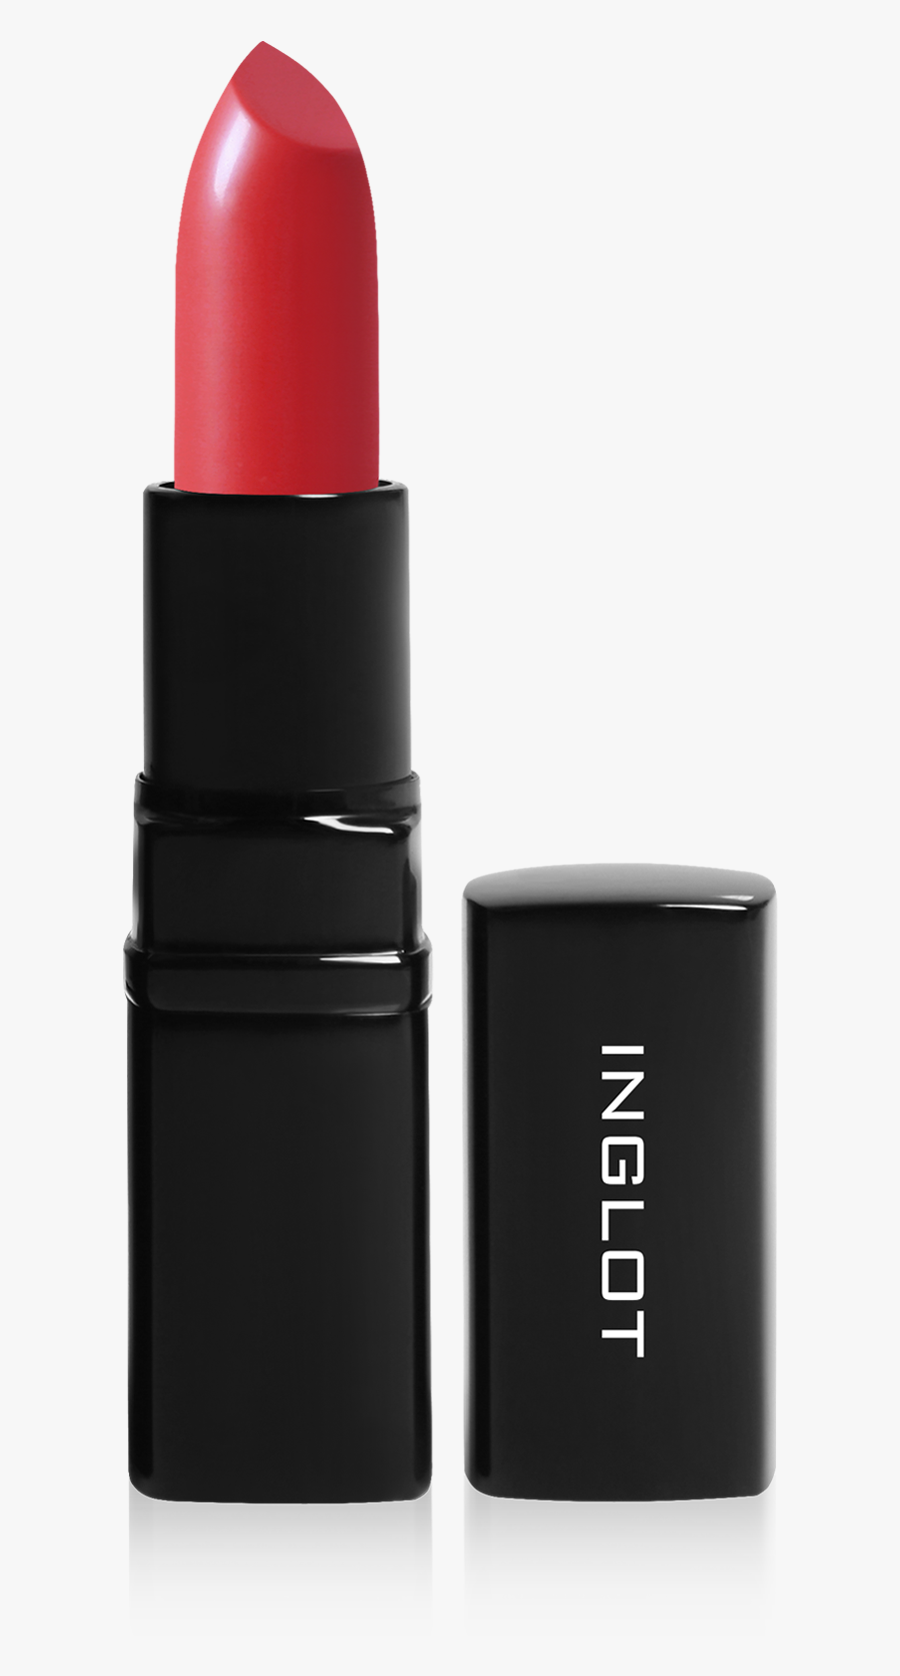 Download Lipstick Png Clipart - Inglot Lipstick Matte, Transparent Clipart